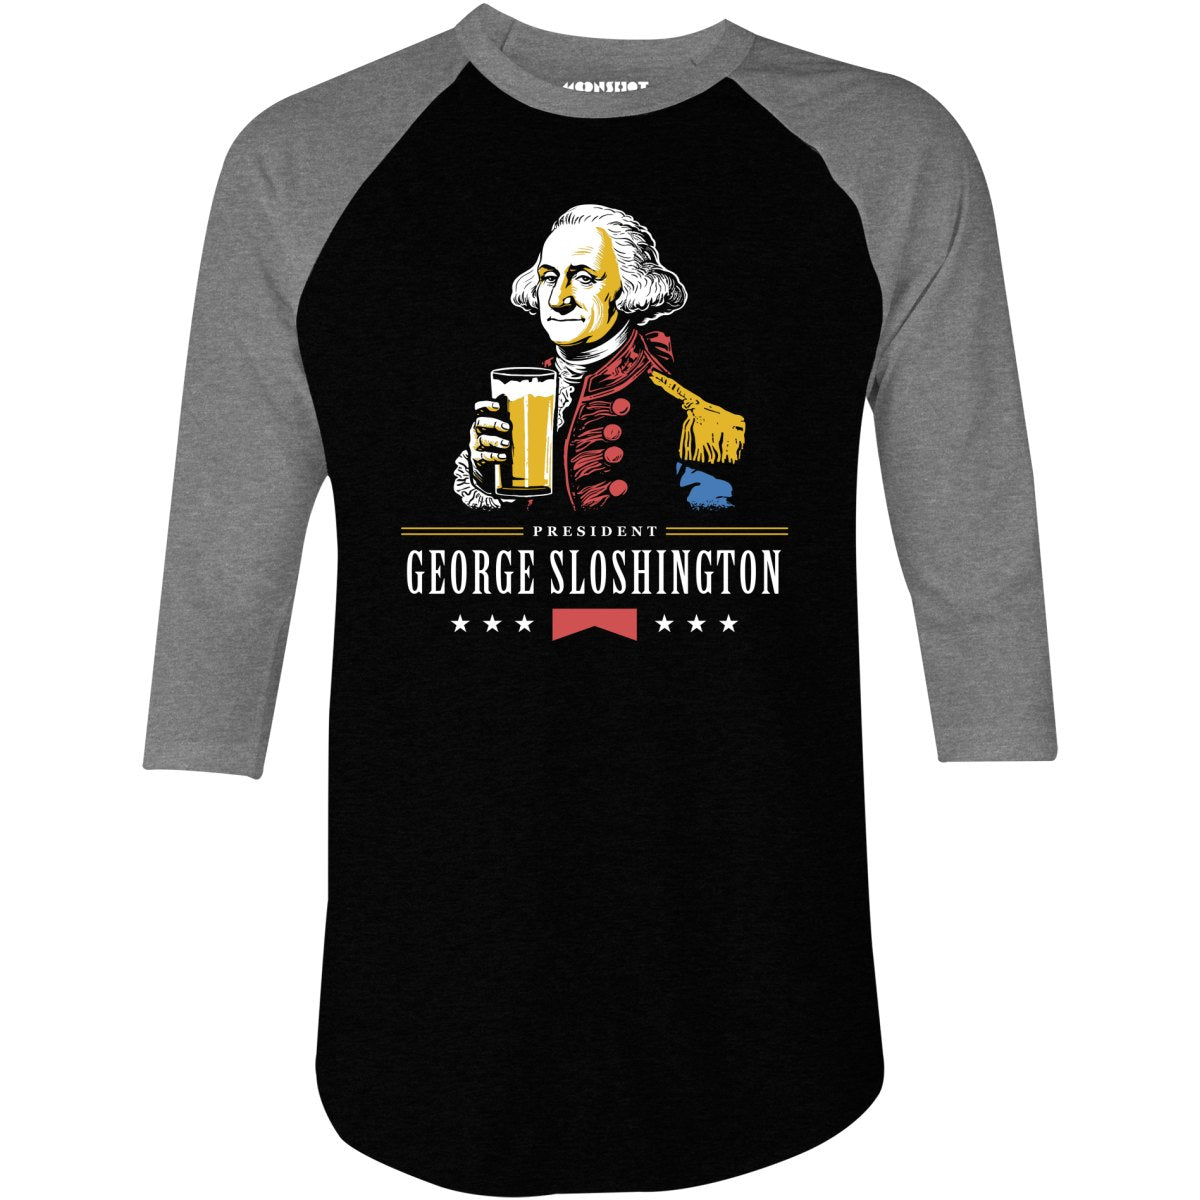 President George Sloshington - 3/4 Sleeve Raglan T-Shirt